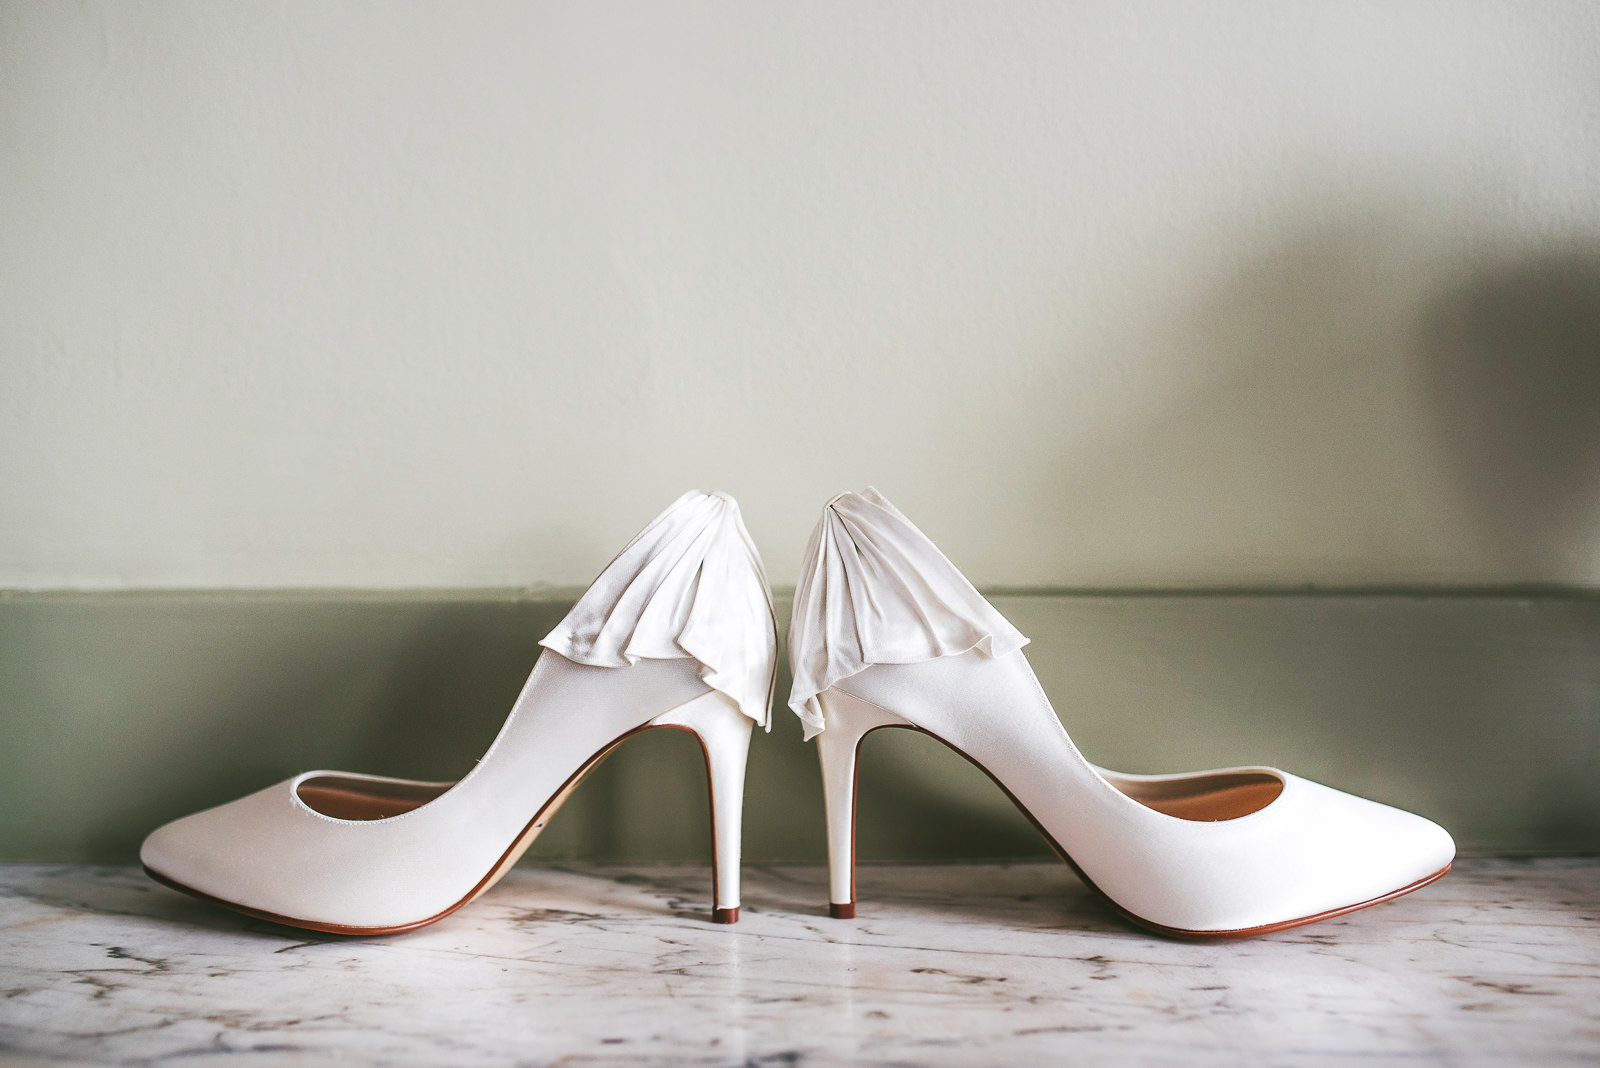 Rainbow Bridal shoes